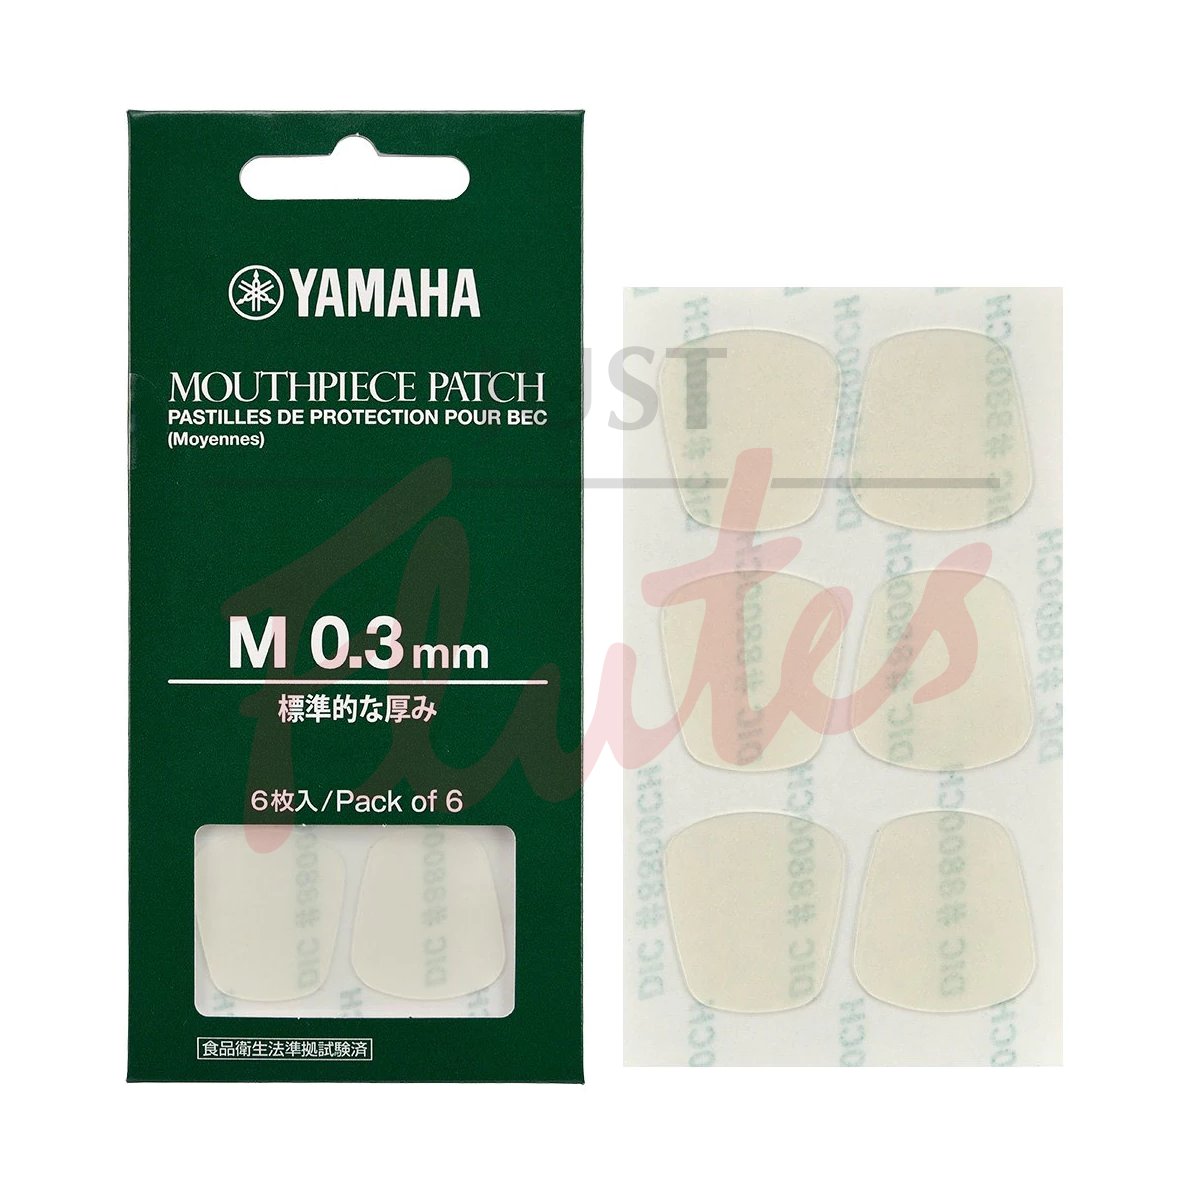 Yamaha Mouthpiece Patches, 0.3mm, Medium, 6-pack